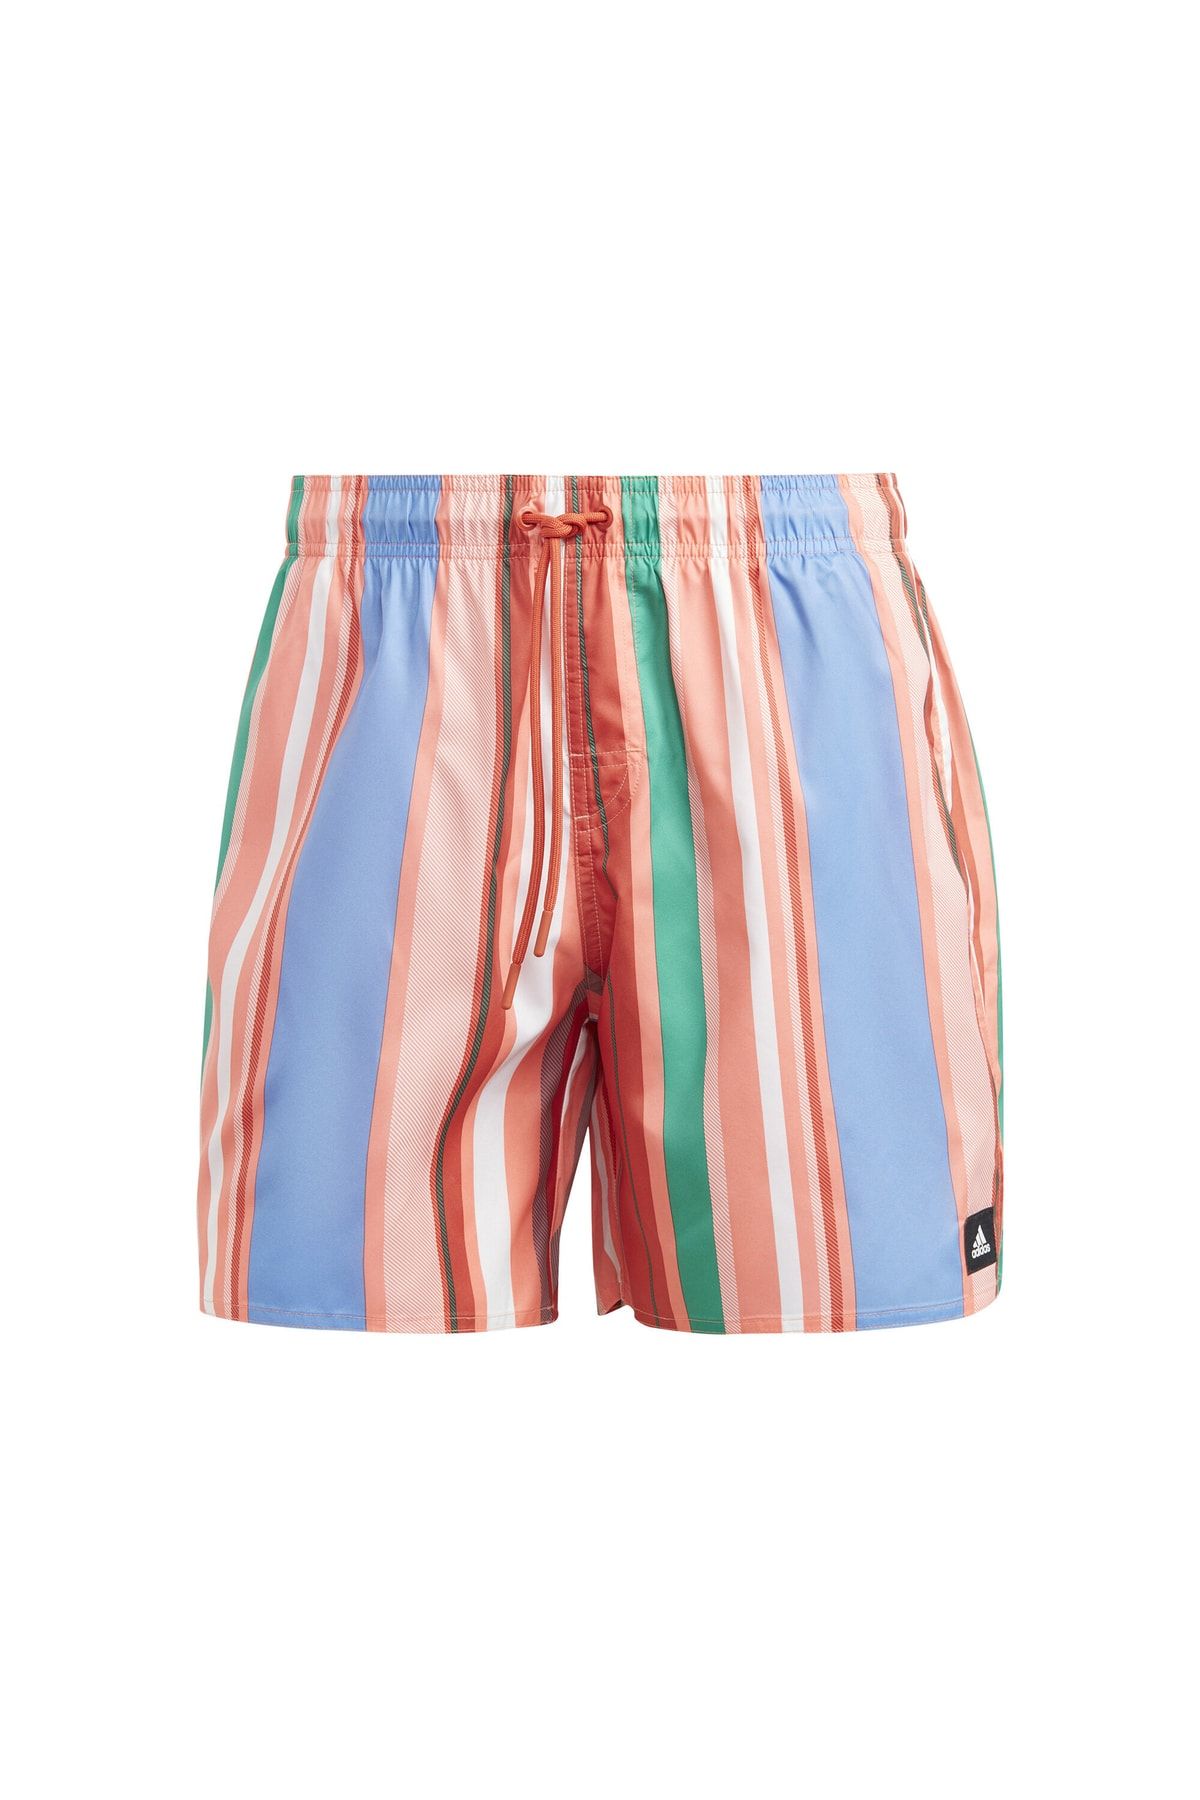 adidas Striped Clx Sl Erkek Yüzücü Şortu Ia7753 Renkli